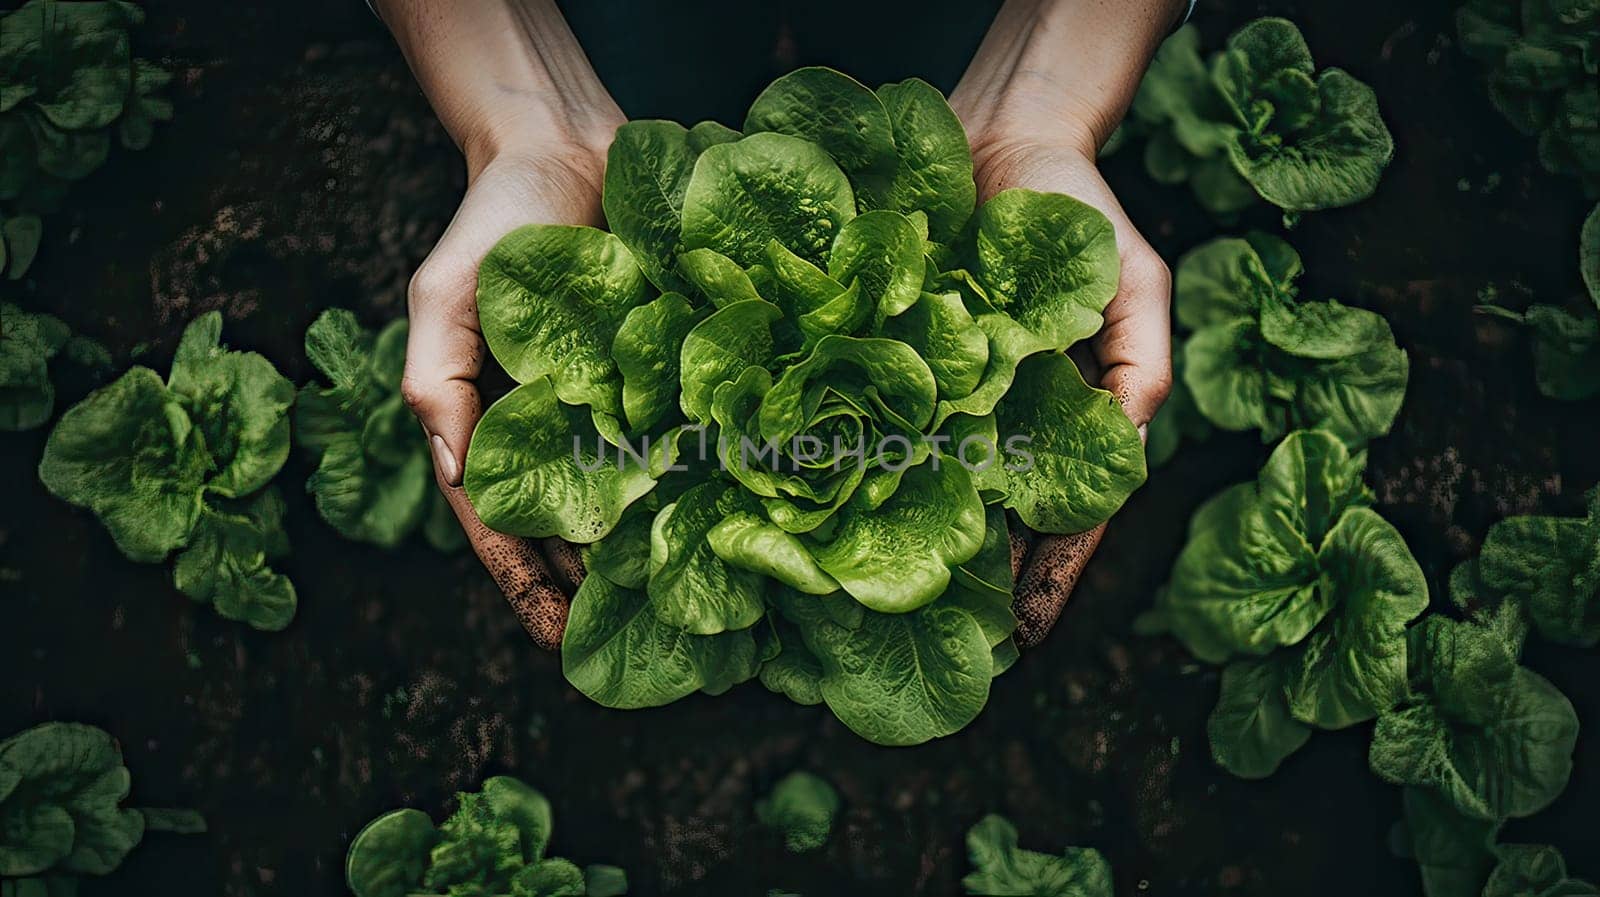 Abundance of Fresh Green Lettuce Grasped in Hands, Thriving in Nurturing Garden Soil.